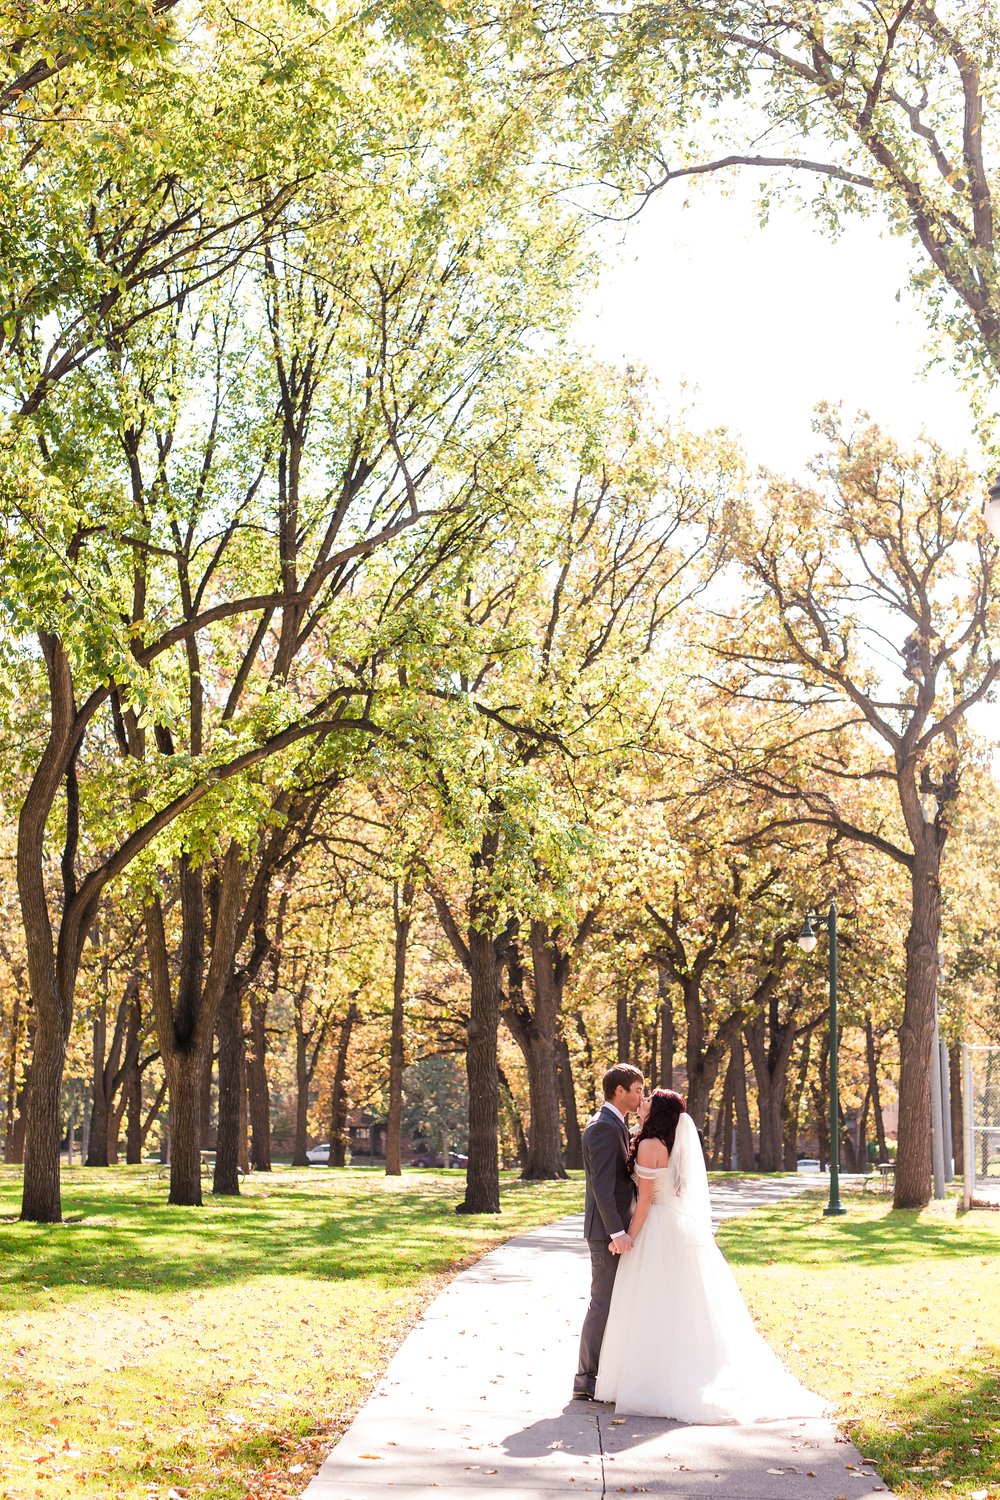 Downtown Fargo Disney Themed Wedding by Amber Langerud Photography | Bride & Groom Island Park